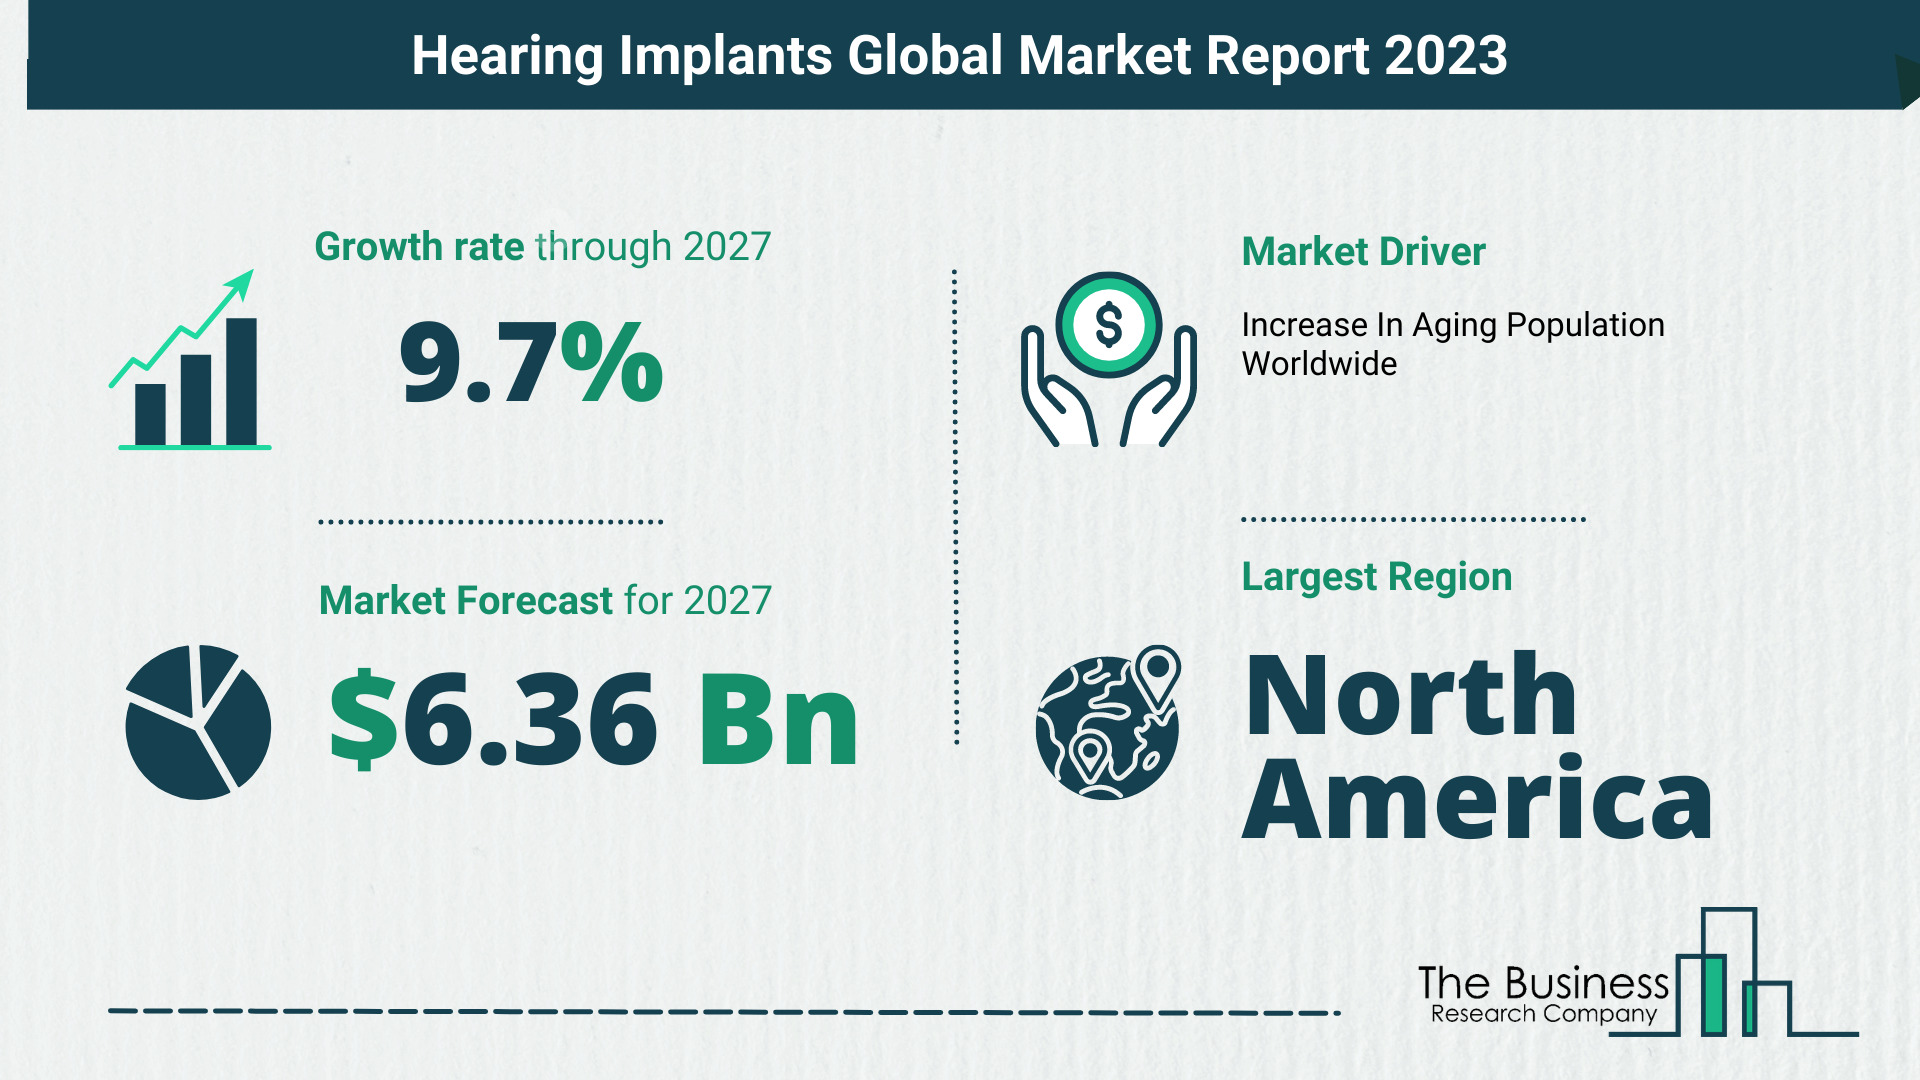 Global Hearing Implants Market